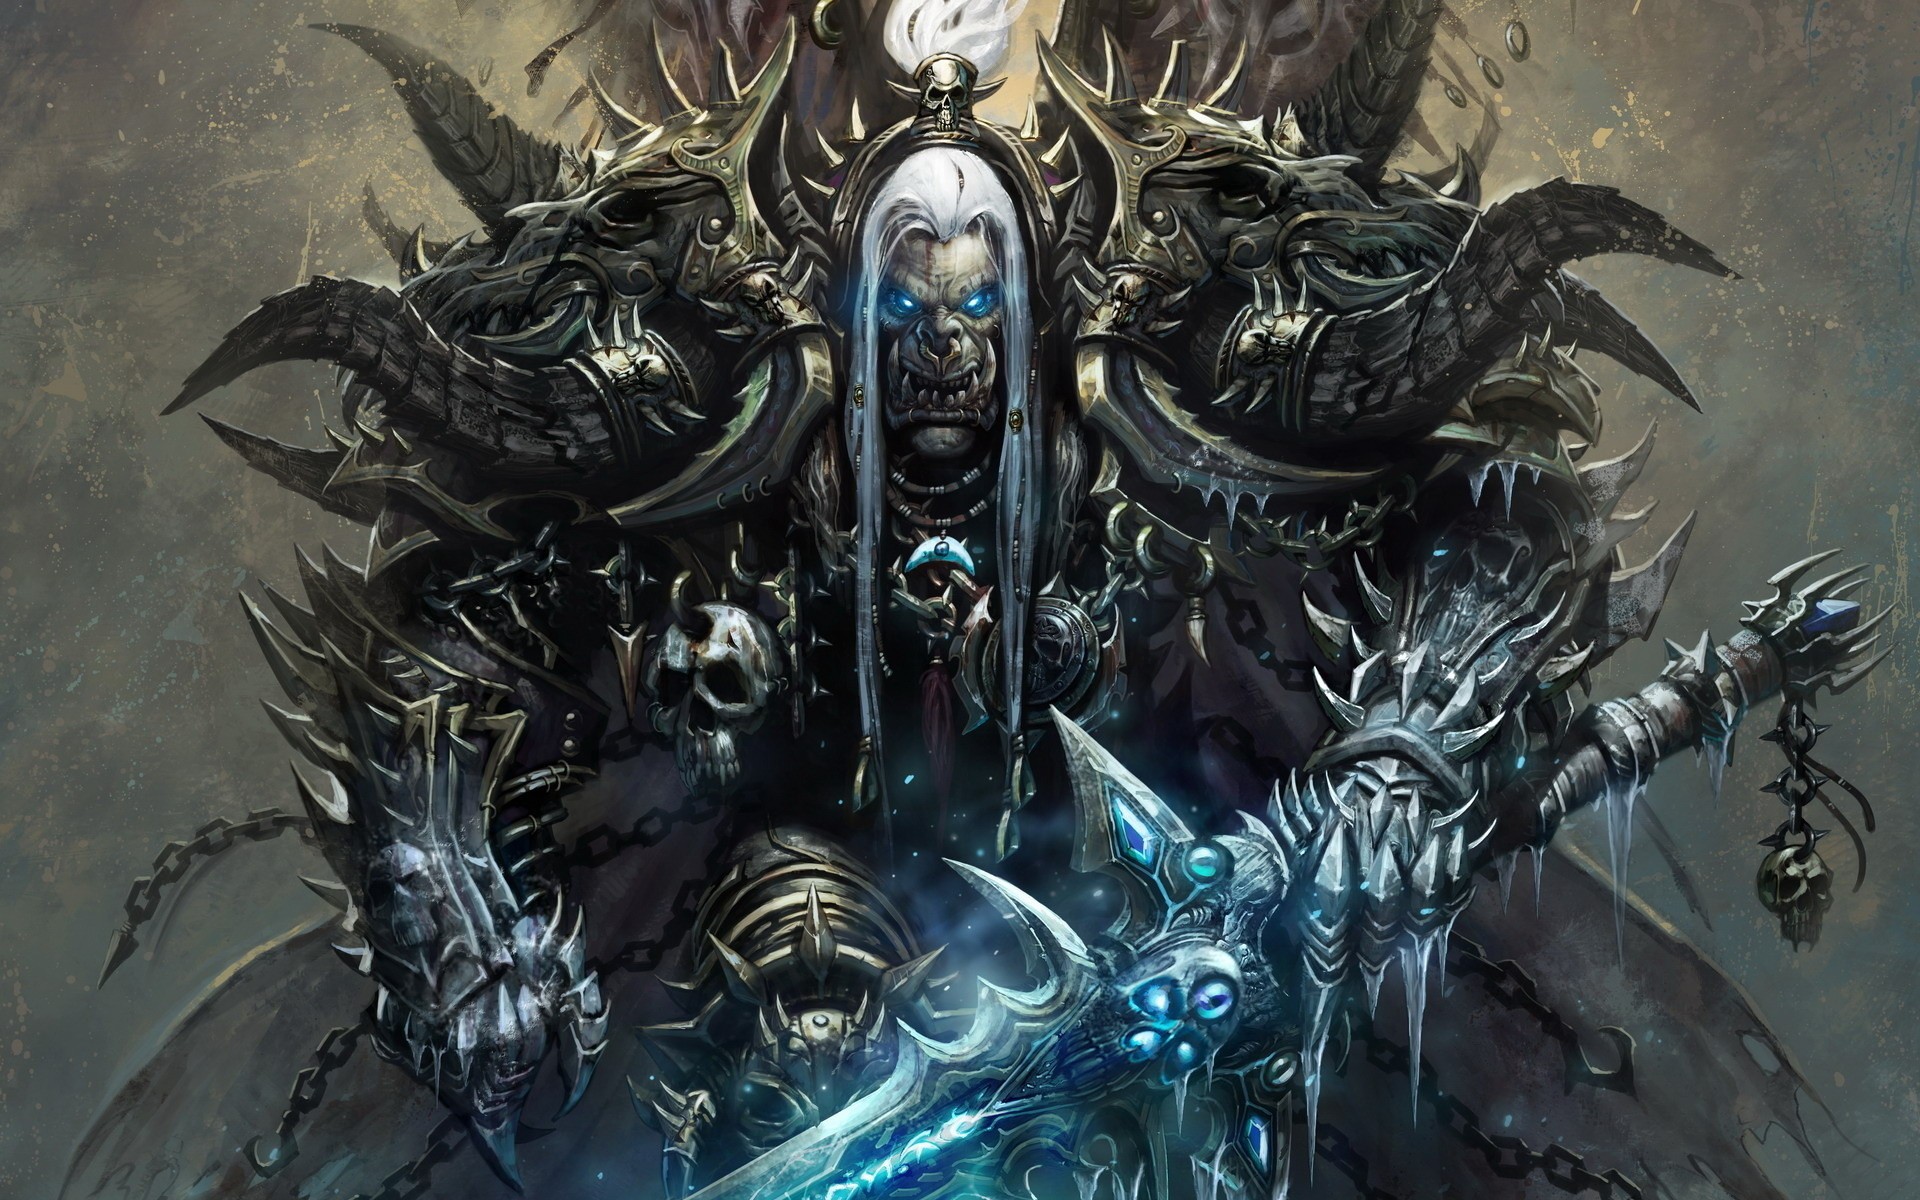 World Of Warcraft Art